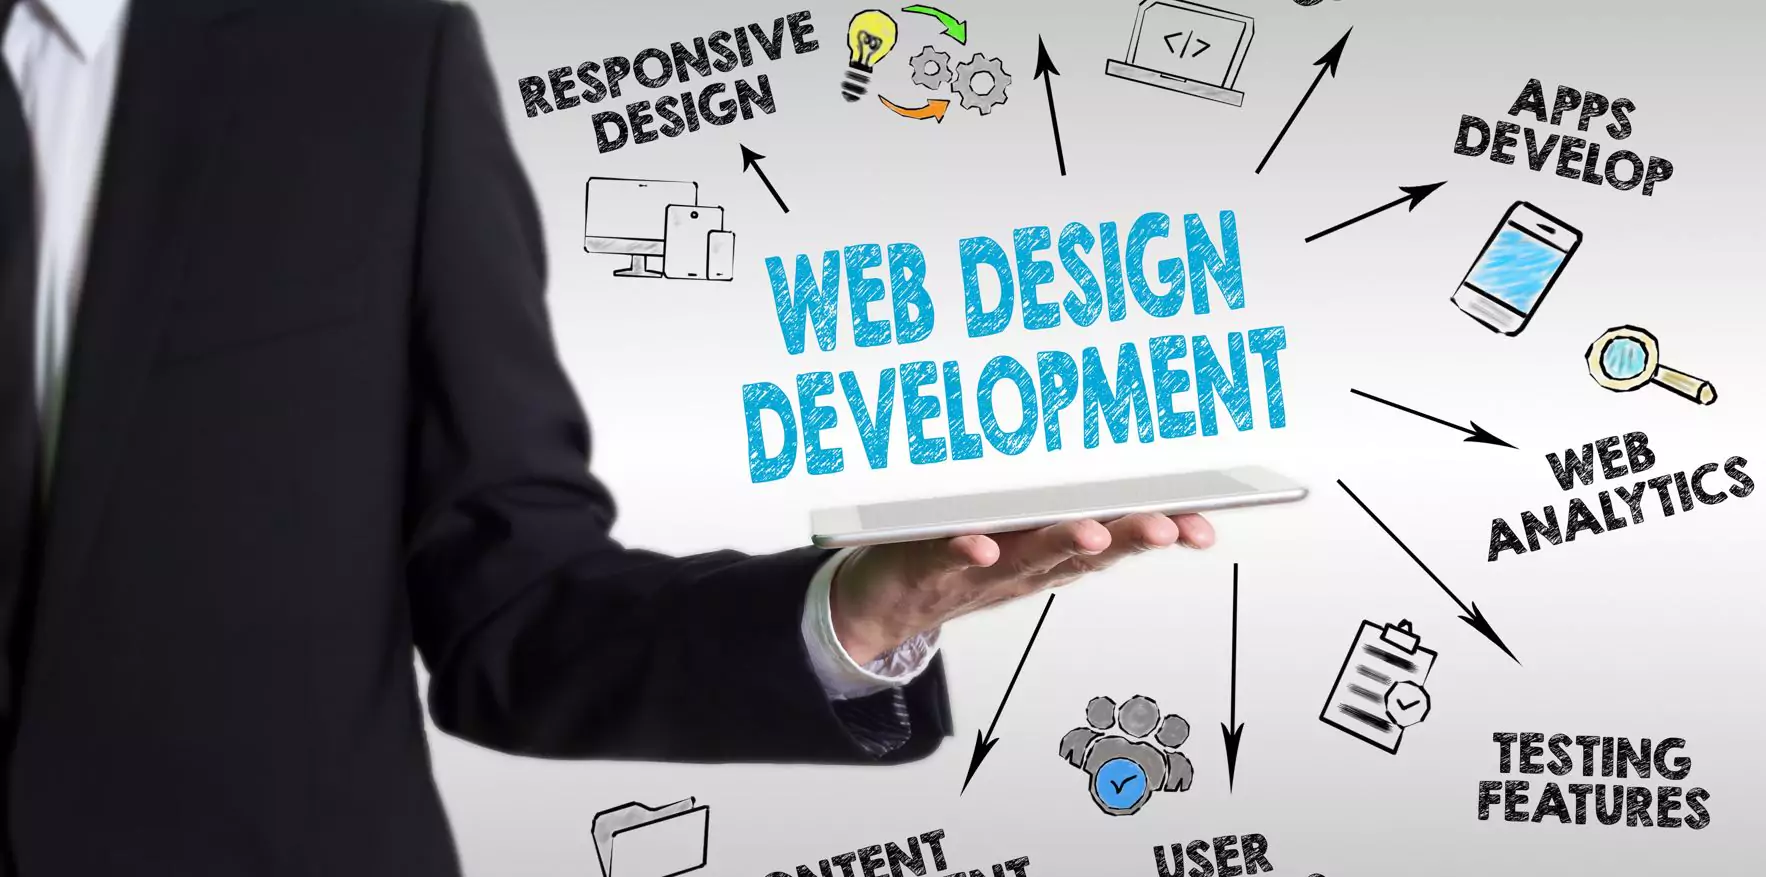 Web Design features